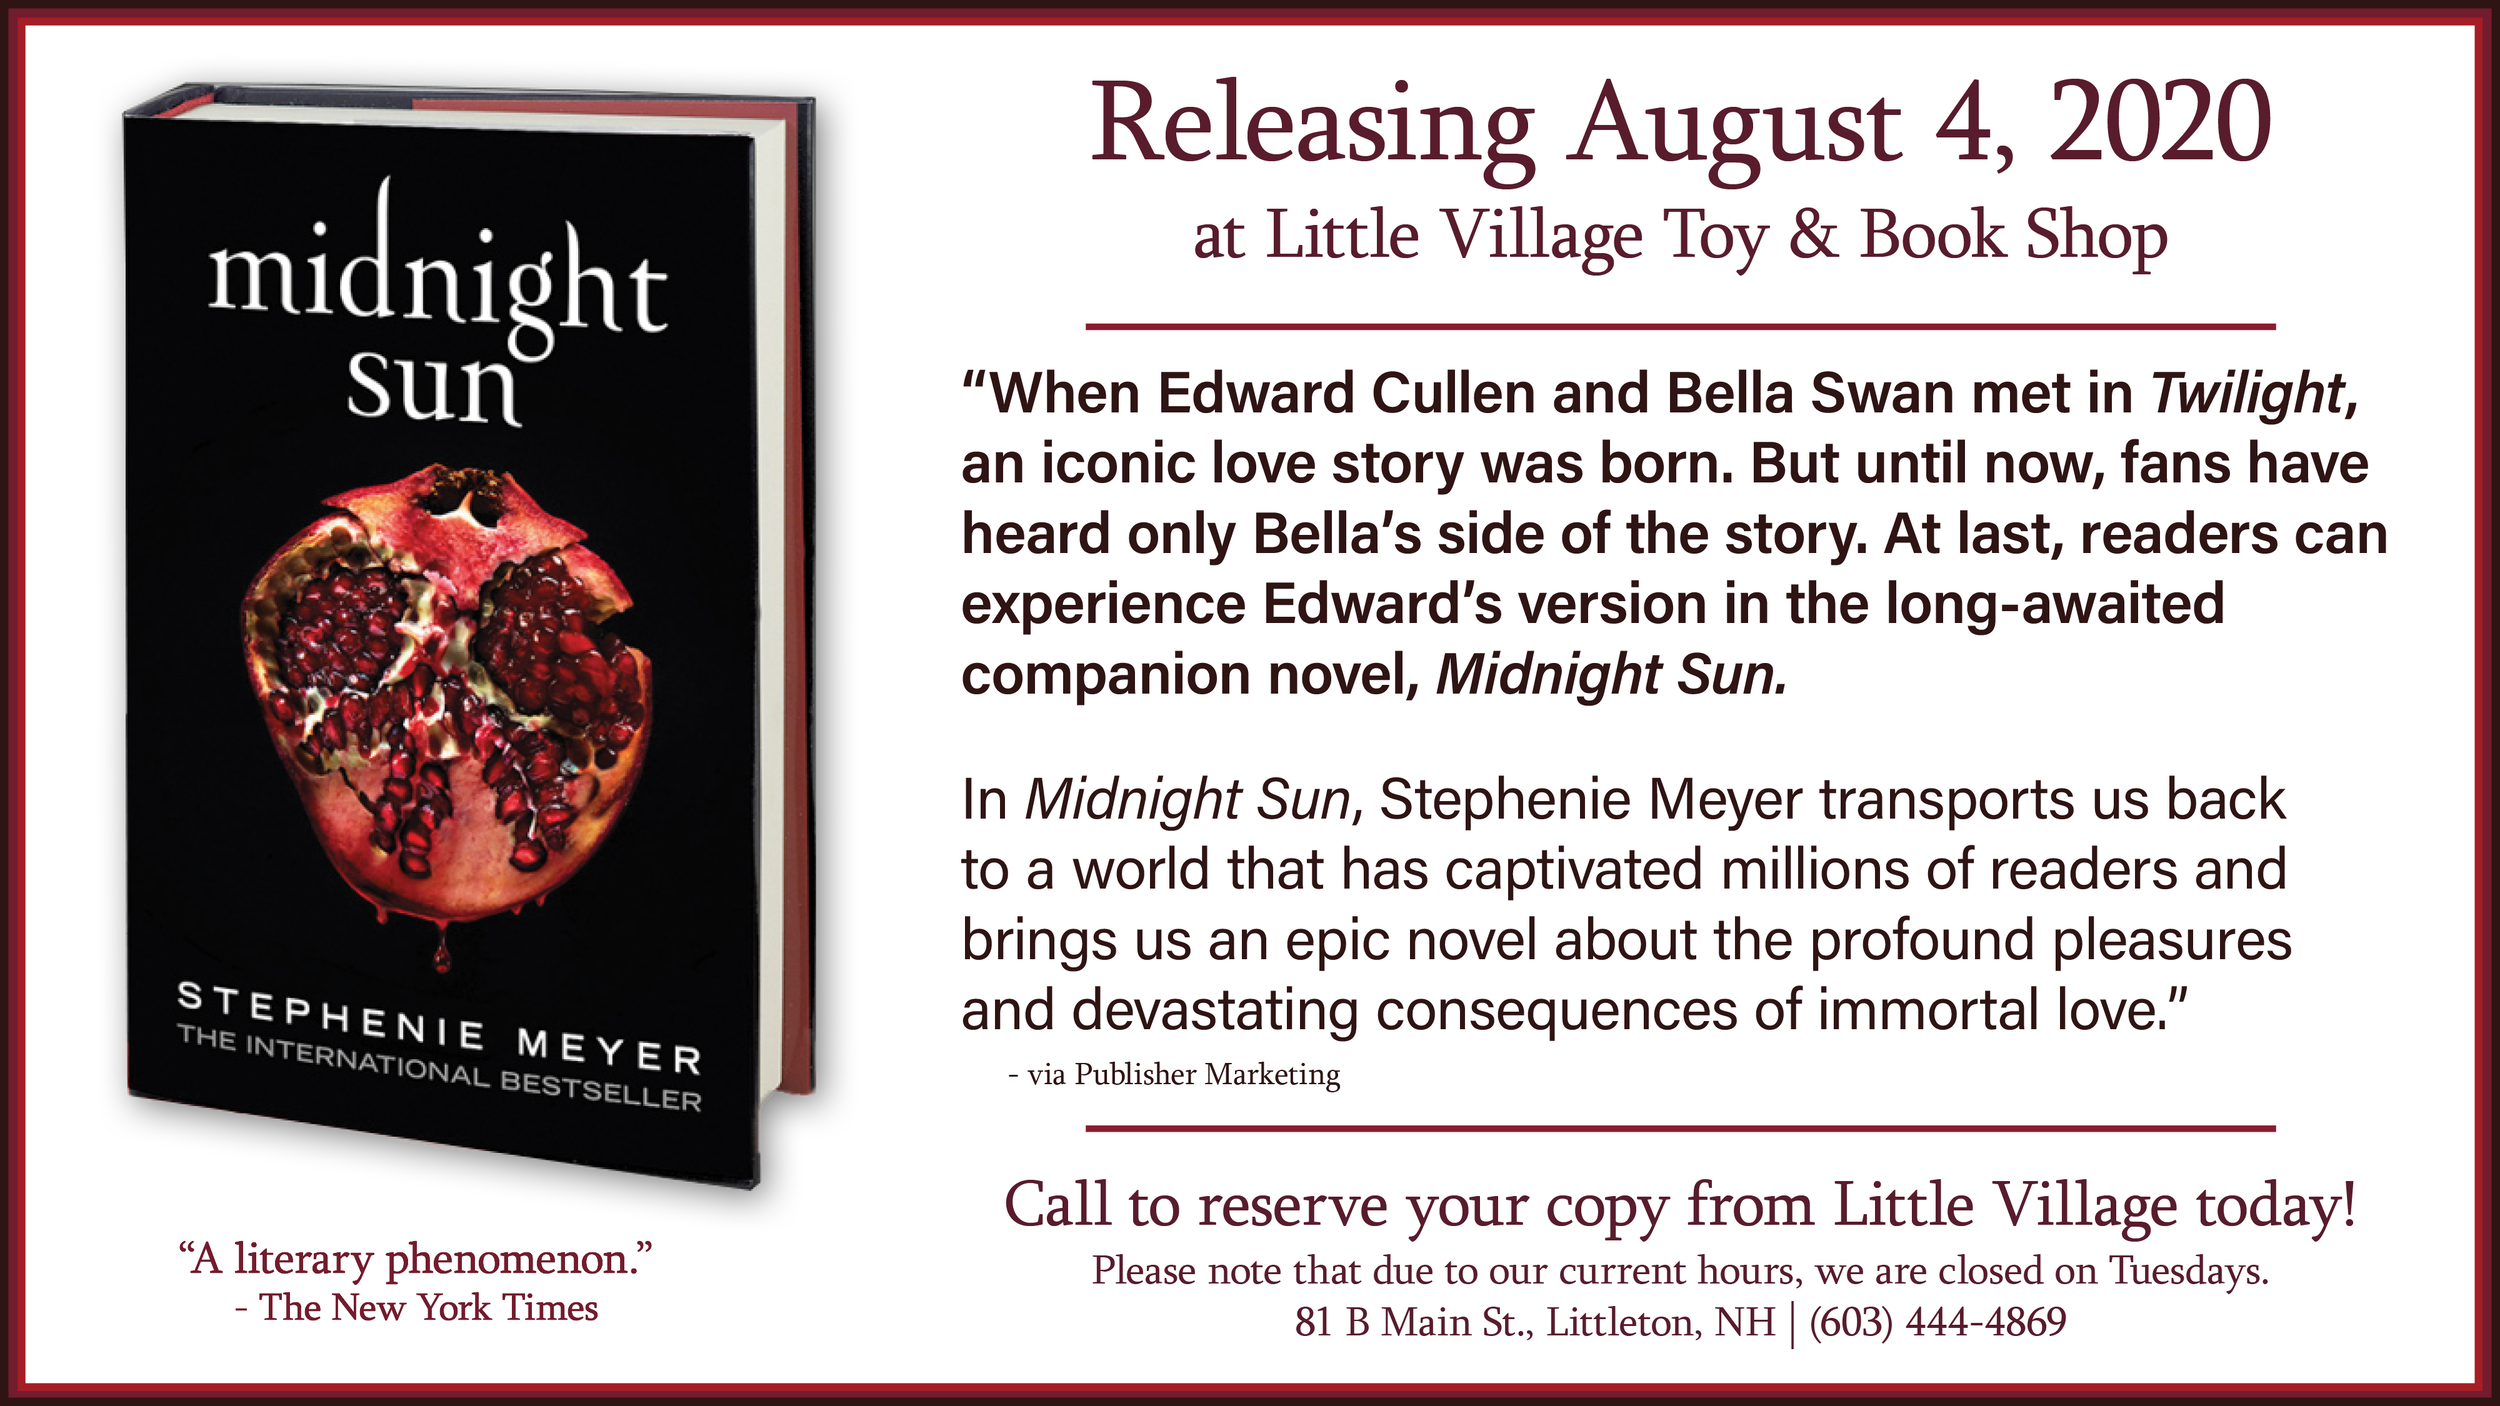 Midnight Sun, Stephenie Meyer's New Book, Available August 4